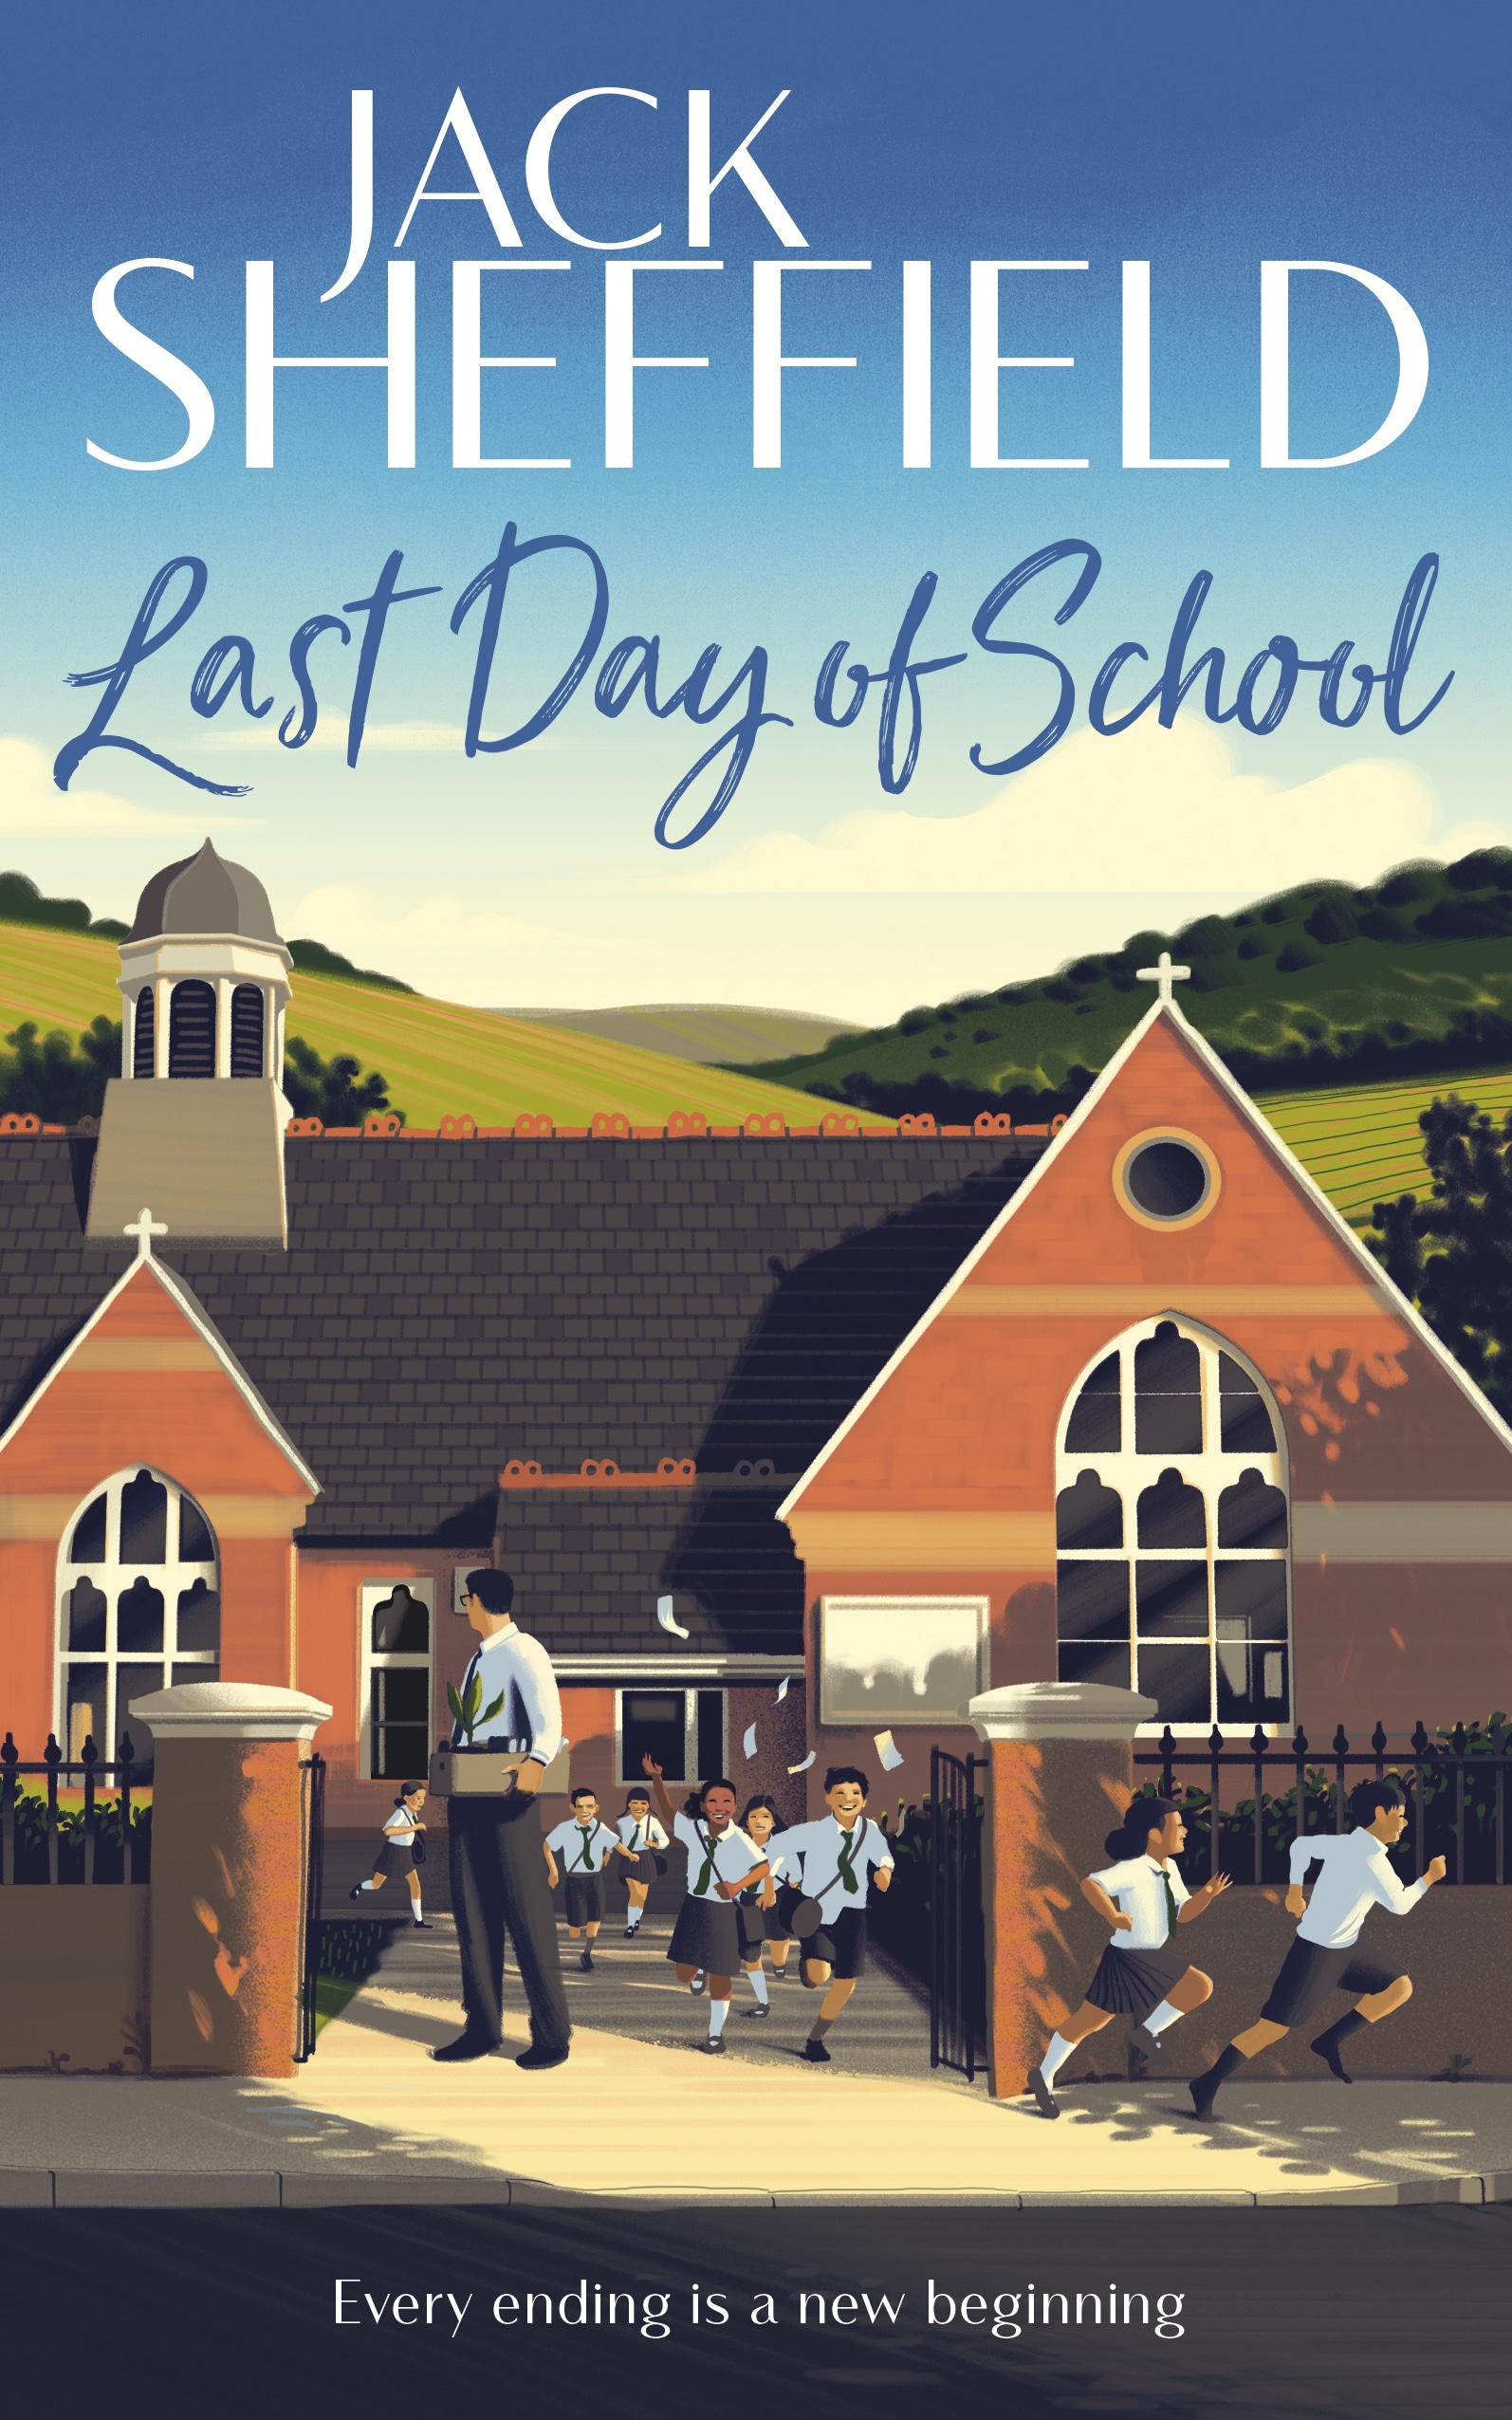 Book “Last Day of School” by Jack Sheffield — September 8, 2022